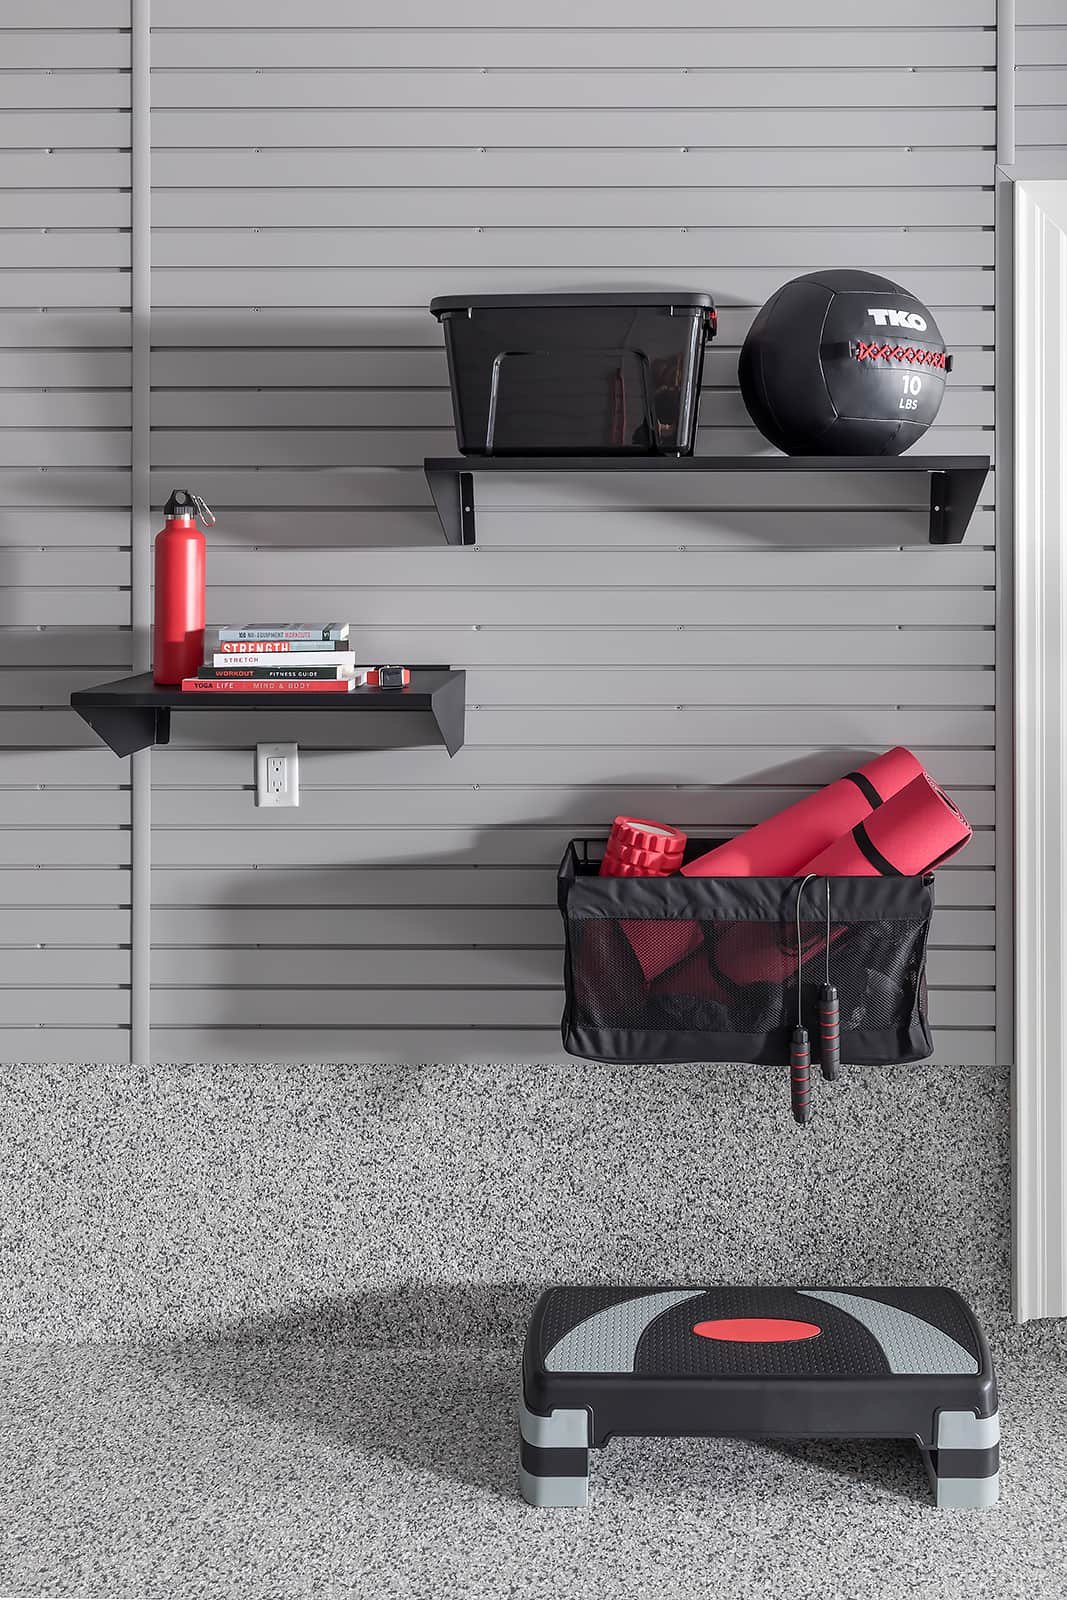 xslatwall-shelves-fitness-room-garage.jpg.pagespeed.ic.fU5haQ5epo